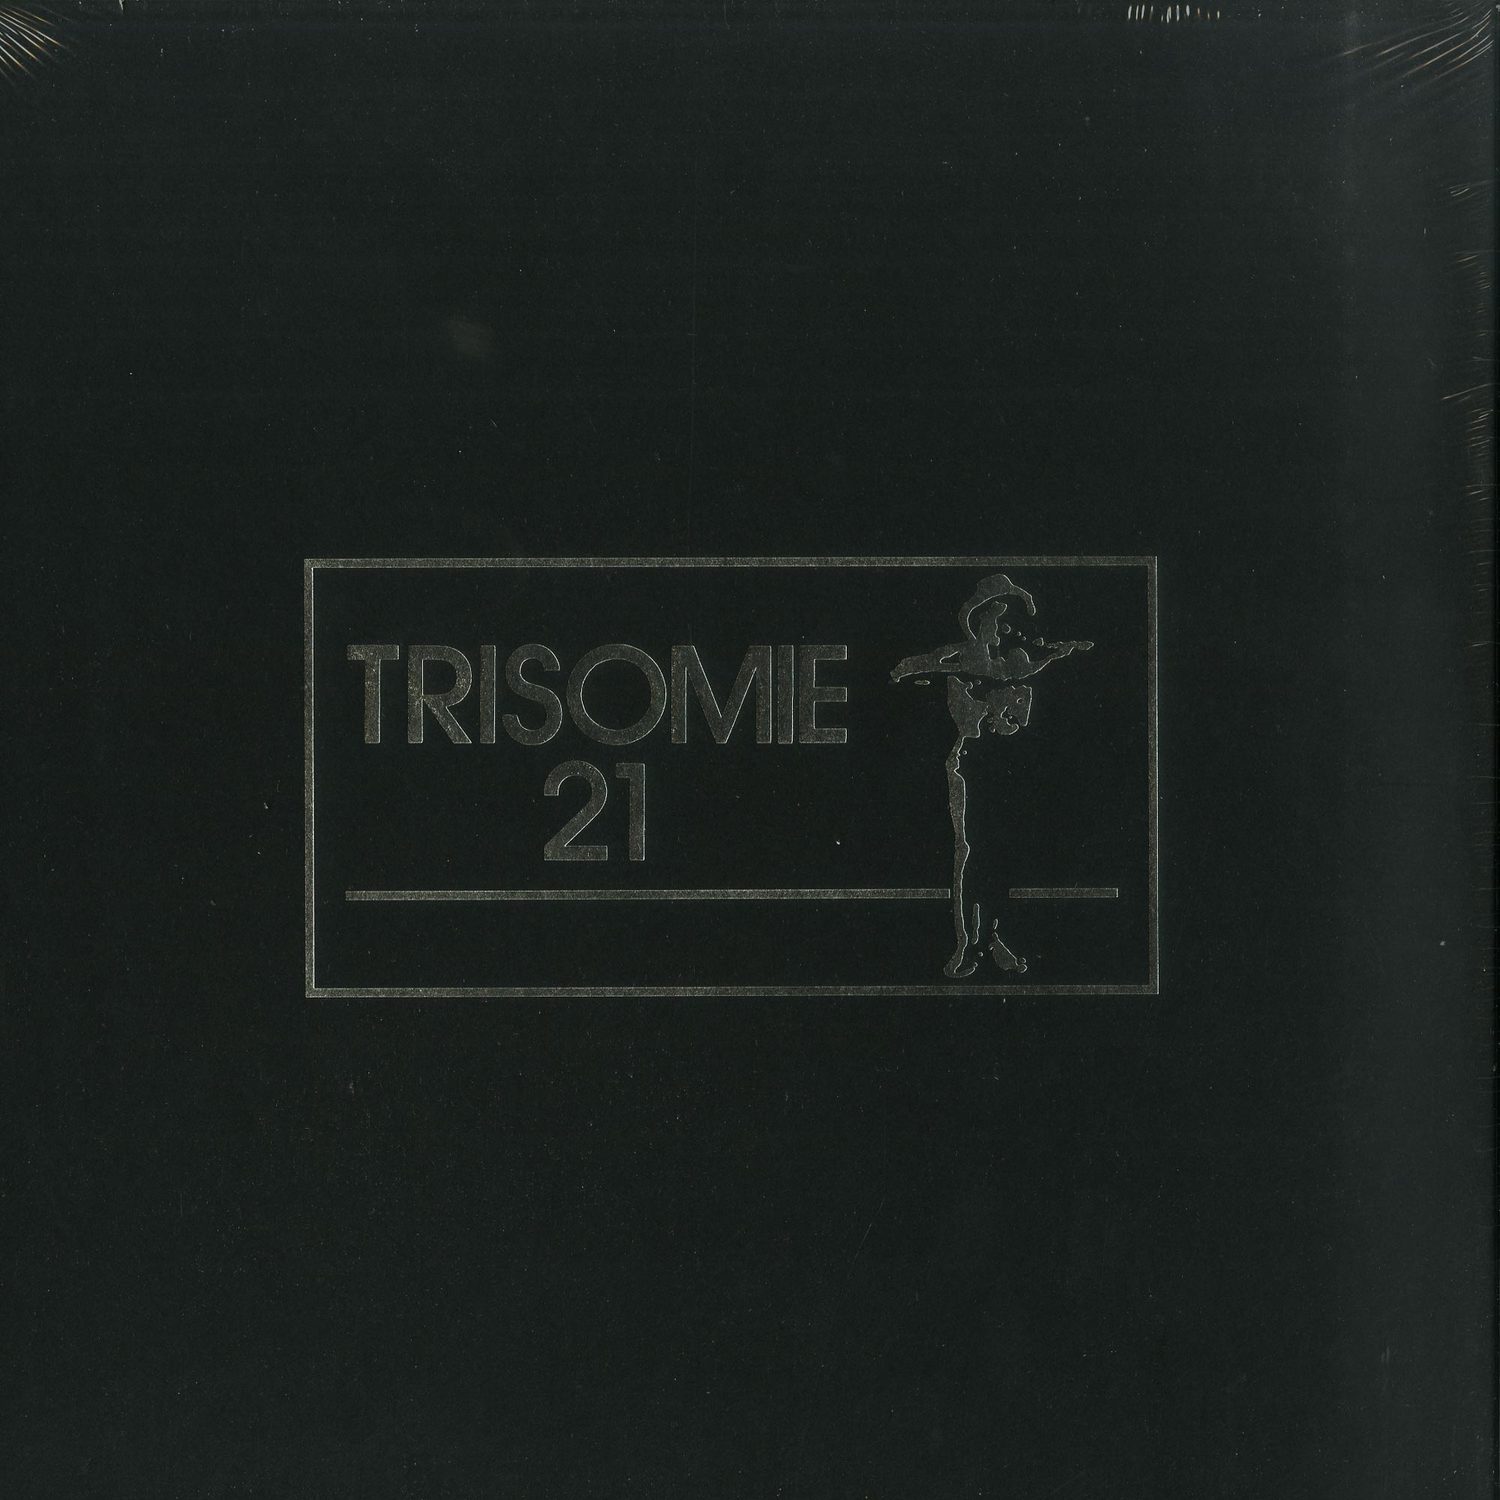 Trisomie 21 - CHAPTER I-IV 